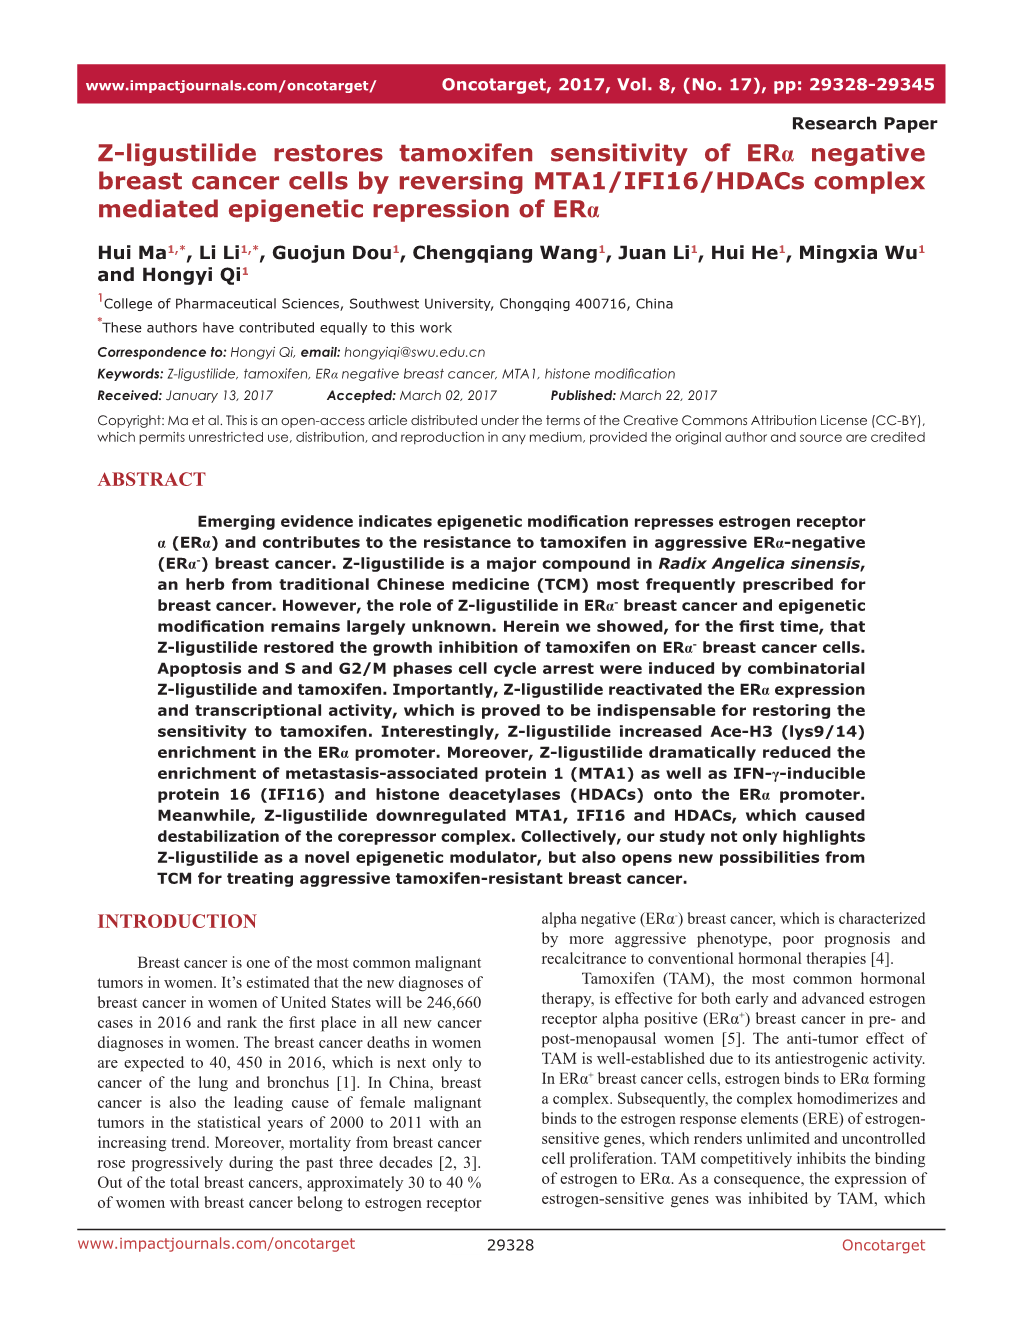 Z-Ligustilide Restores Tamoxifen Sensitivity of Erα Negative Breast Cancer Cells by Reversing MTA1/IFI16/Hdacs Complex Mediated Epigenetic Repression of Erα